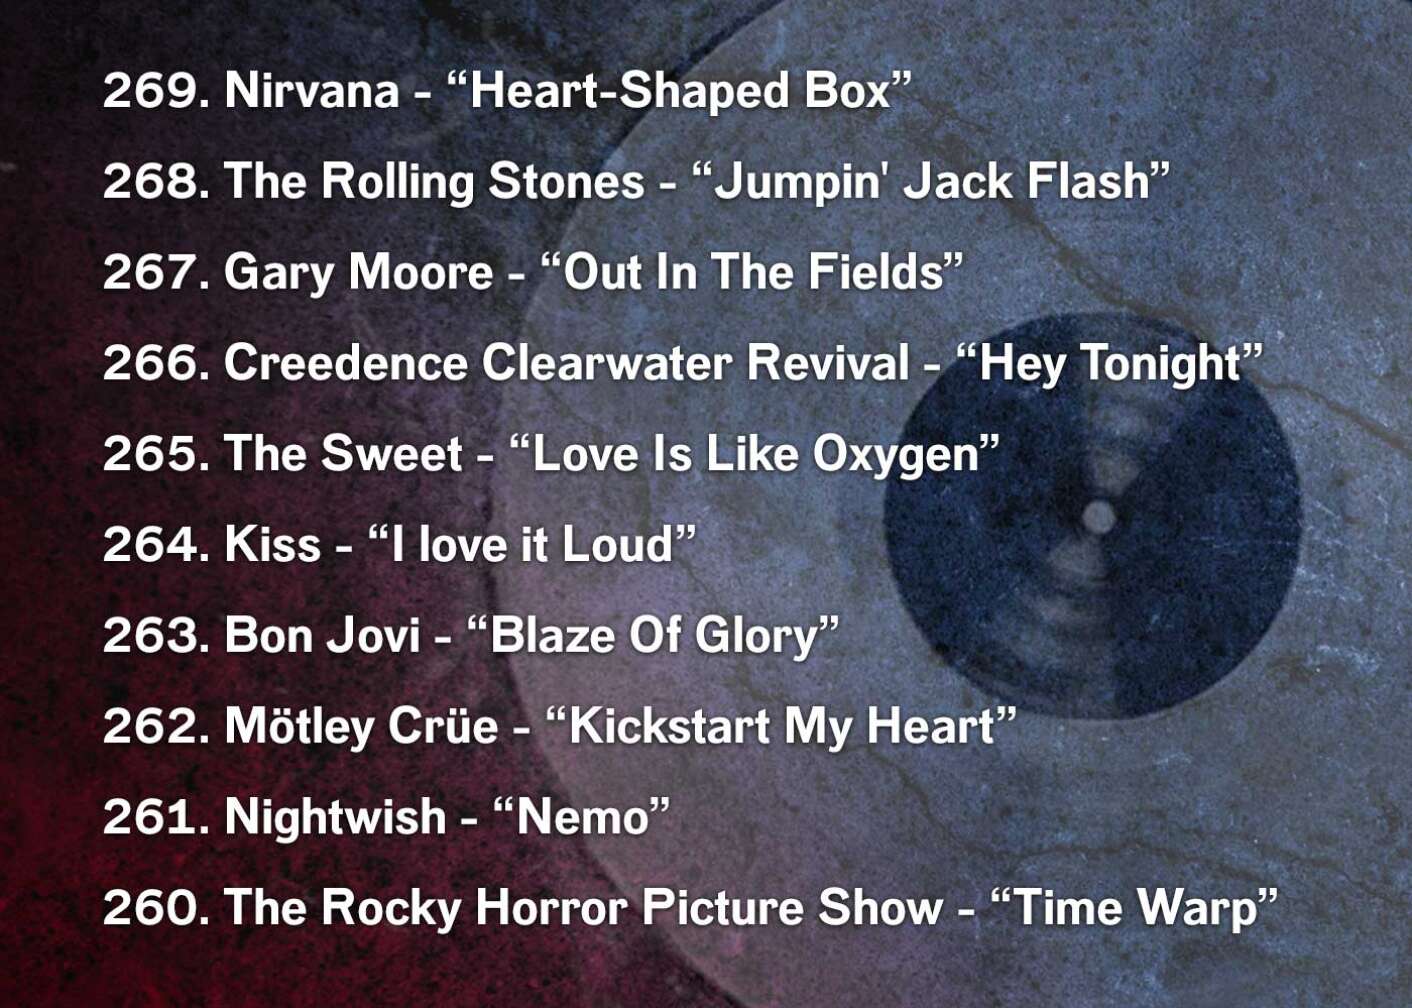 269. Nirvana - “Heart-Shaped Box” 268. The Rolling Stones - “Jumpin' Jack Flash” 267. Gary Moore - “Out In The Fields” 266. Creedence Clearwater Revival - “Hey Tonight” 265. The Sweet - “Love Is Like Oxygen” 264. Kiss - “I love it Loud” 263. Bon Jovi - “Blaze Of Glory” 262. Mötley Crüe - “Kickstart My Heart” 261. Nightwish - “Nemo” 260. The Rocky Horror Picture Show - “Time Warp”